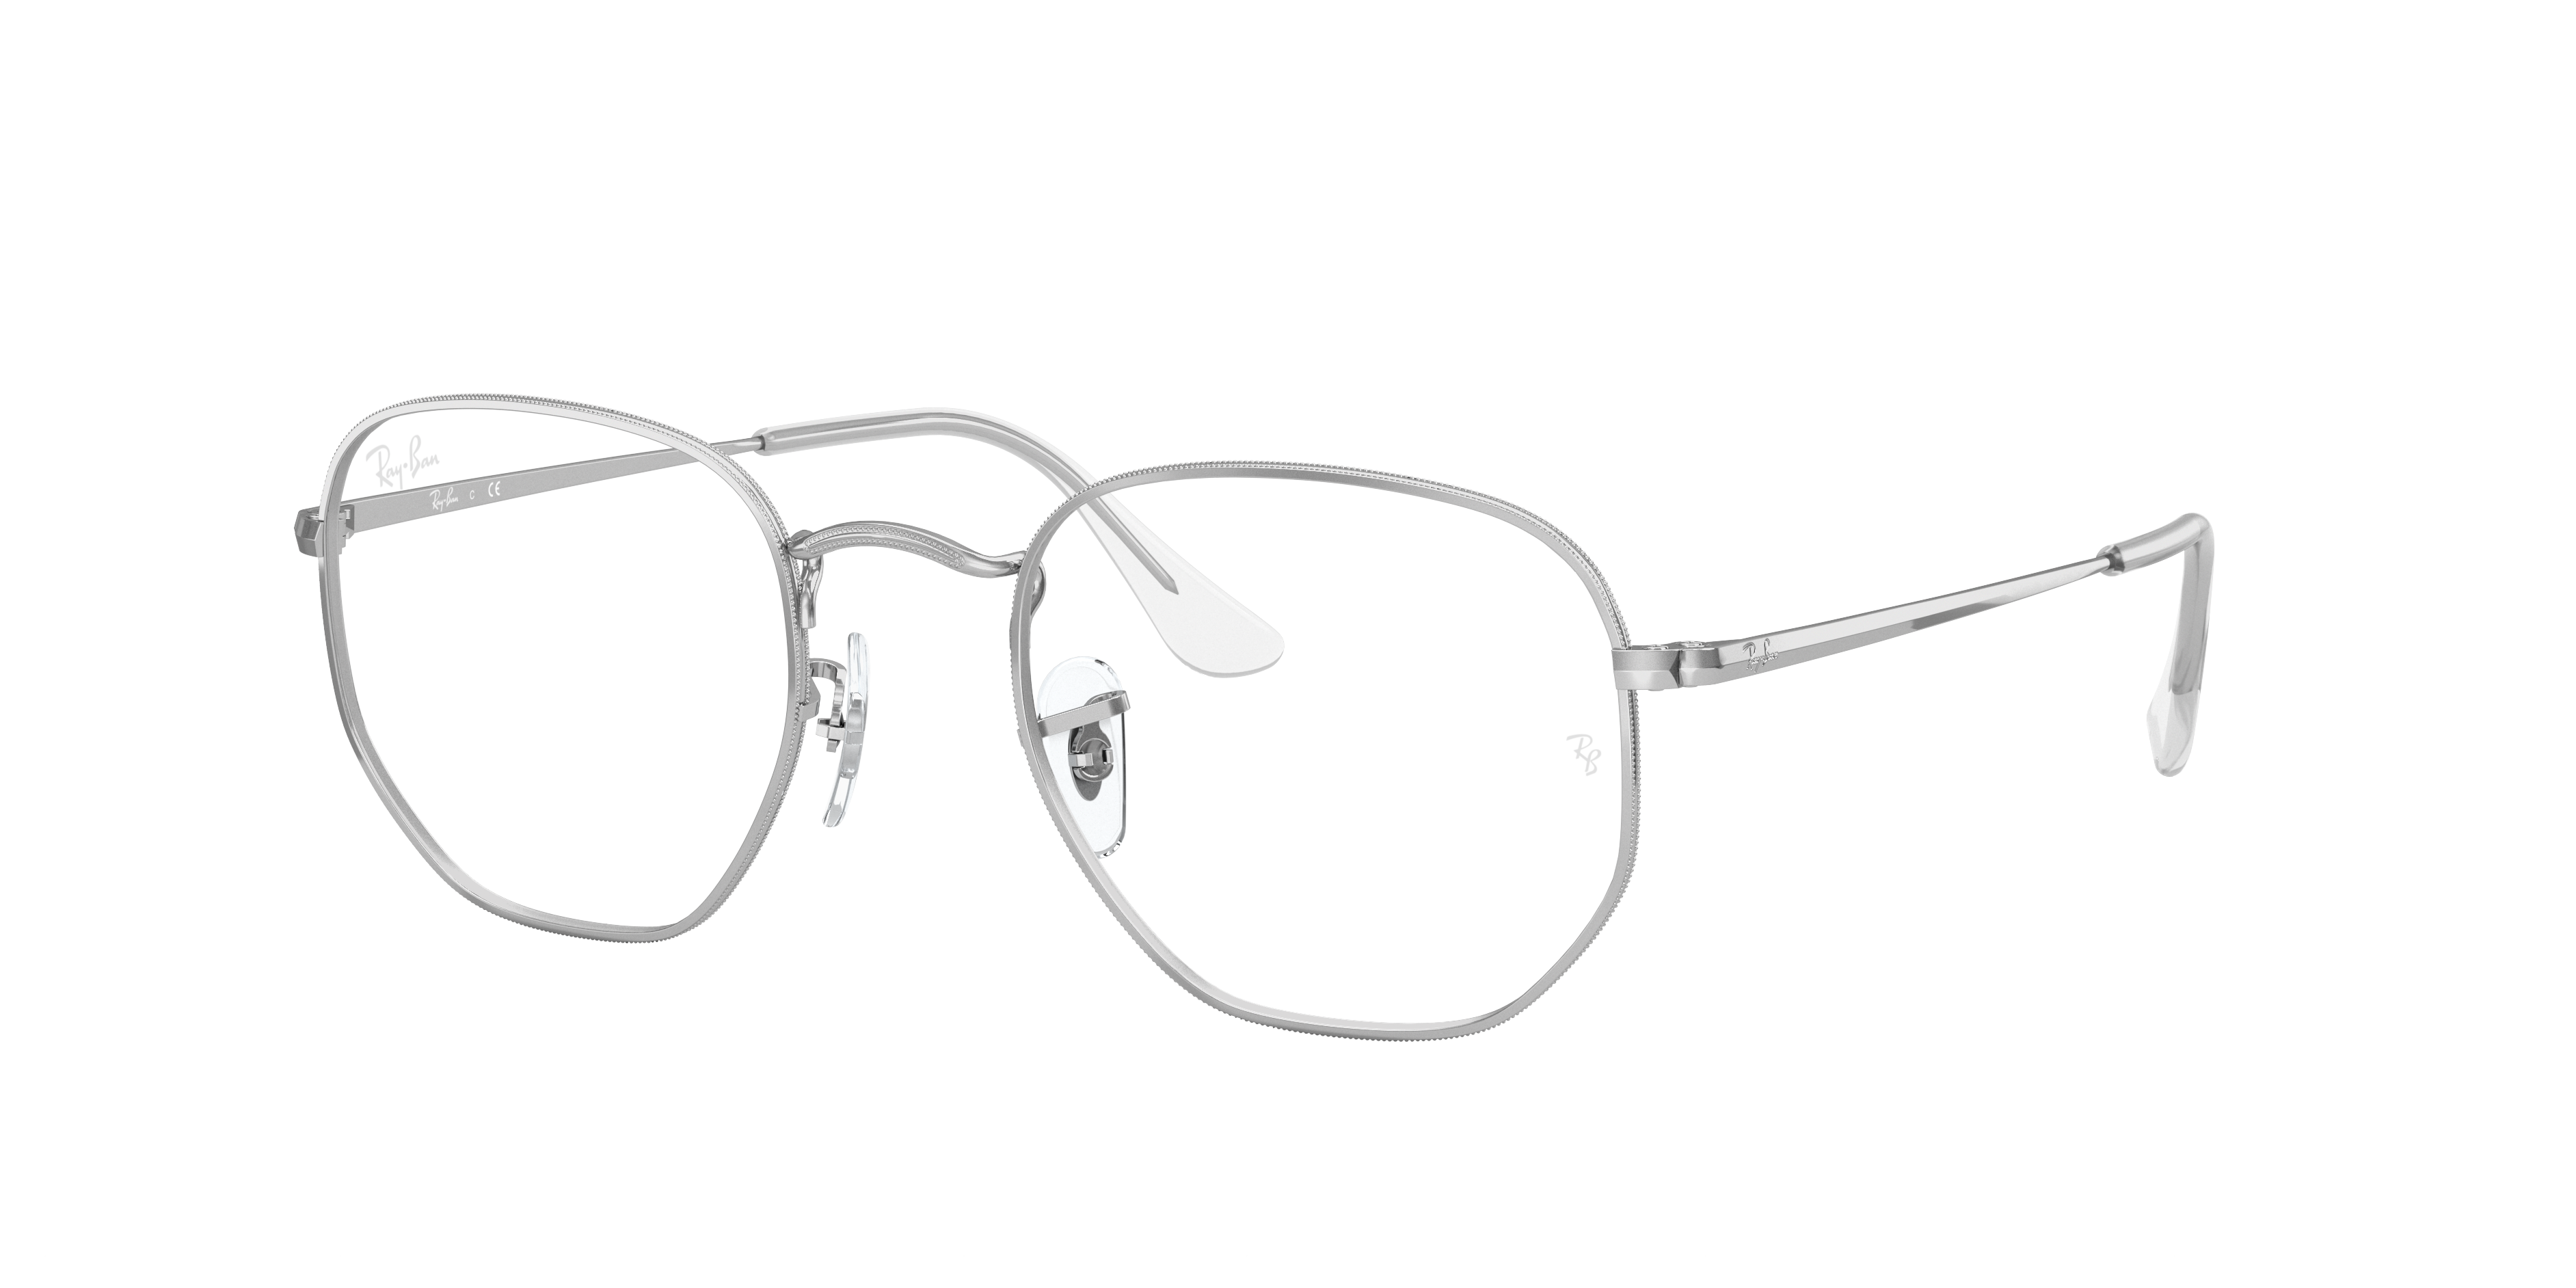 hexagonal ray ban sunglasses